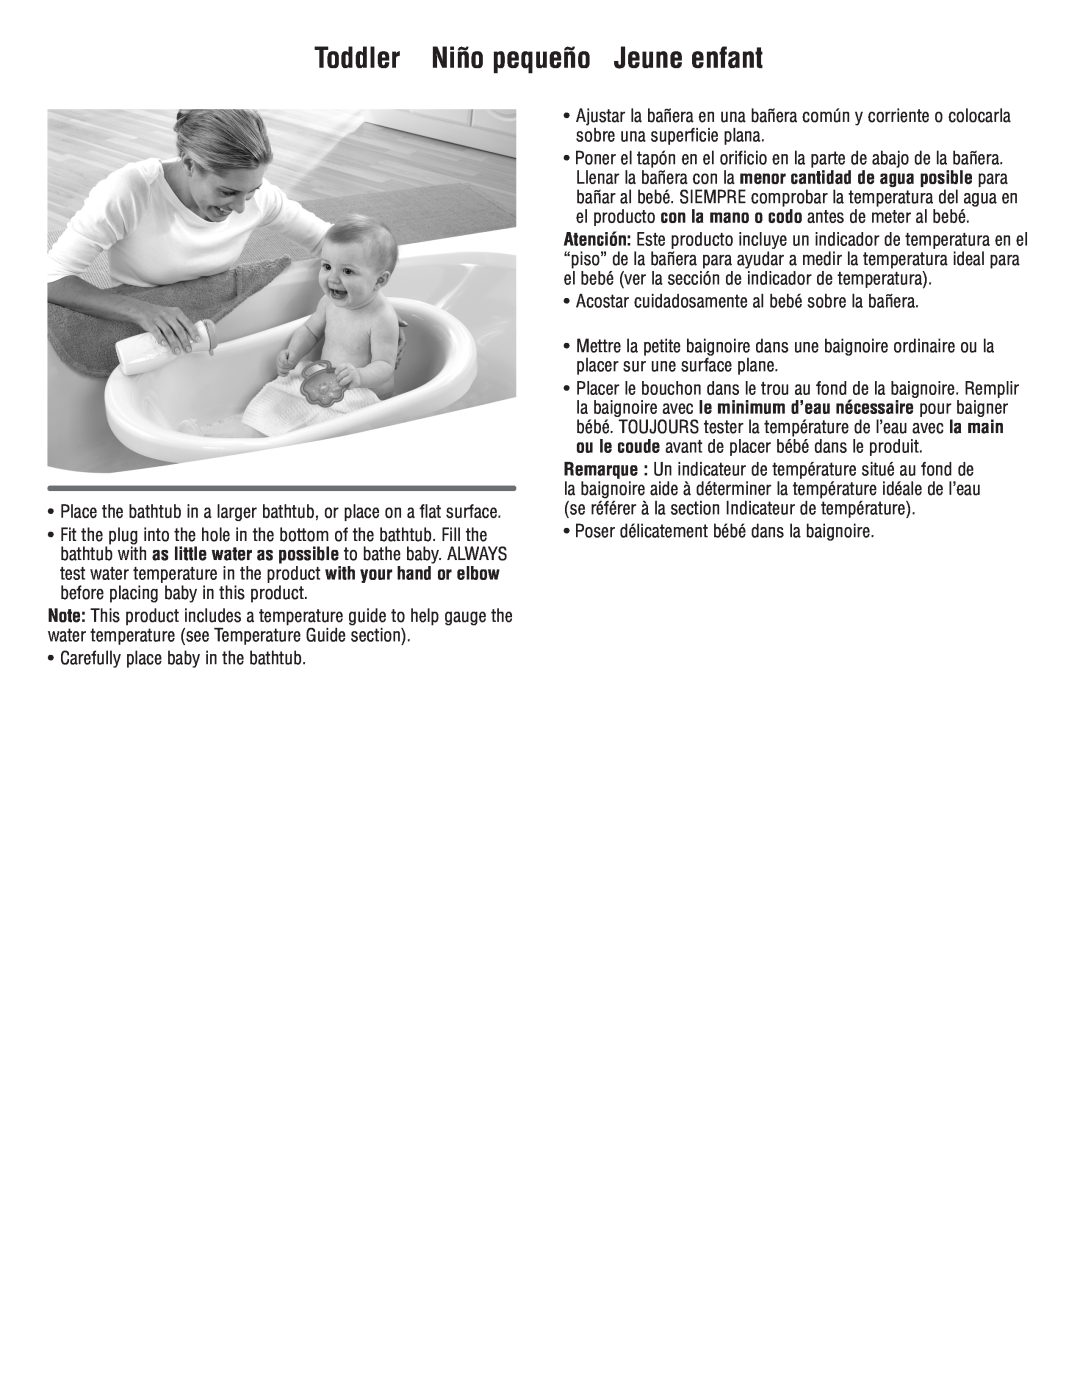 Fisher-Price P9042 manual Toddler Niño pequeño Jeune enfant 